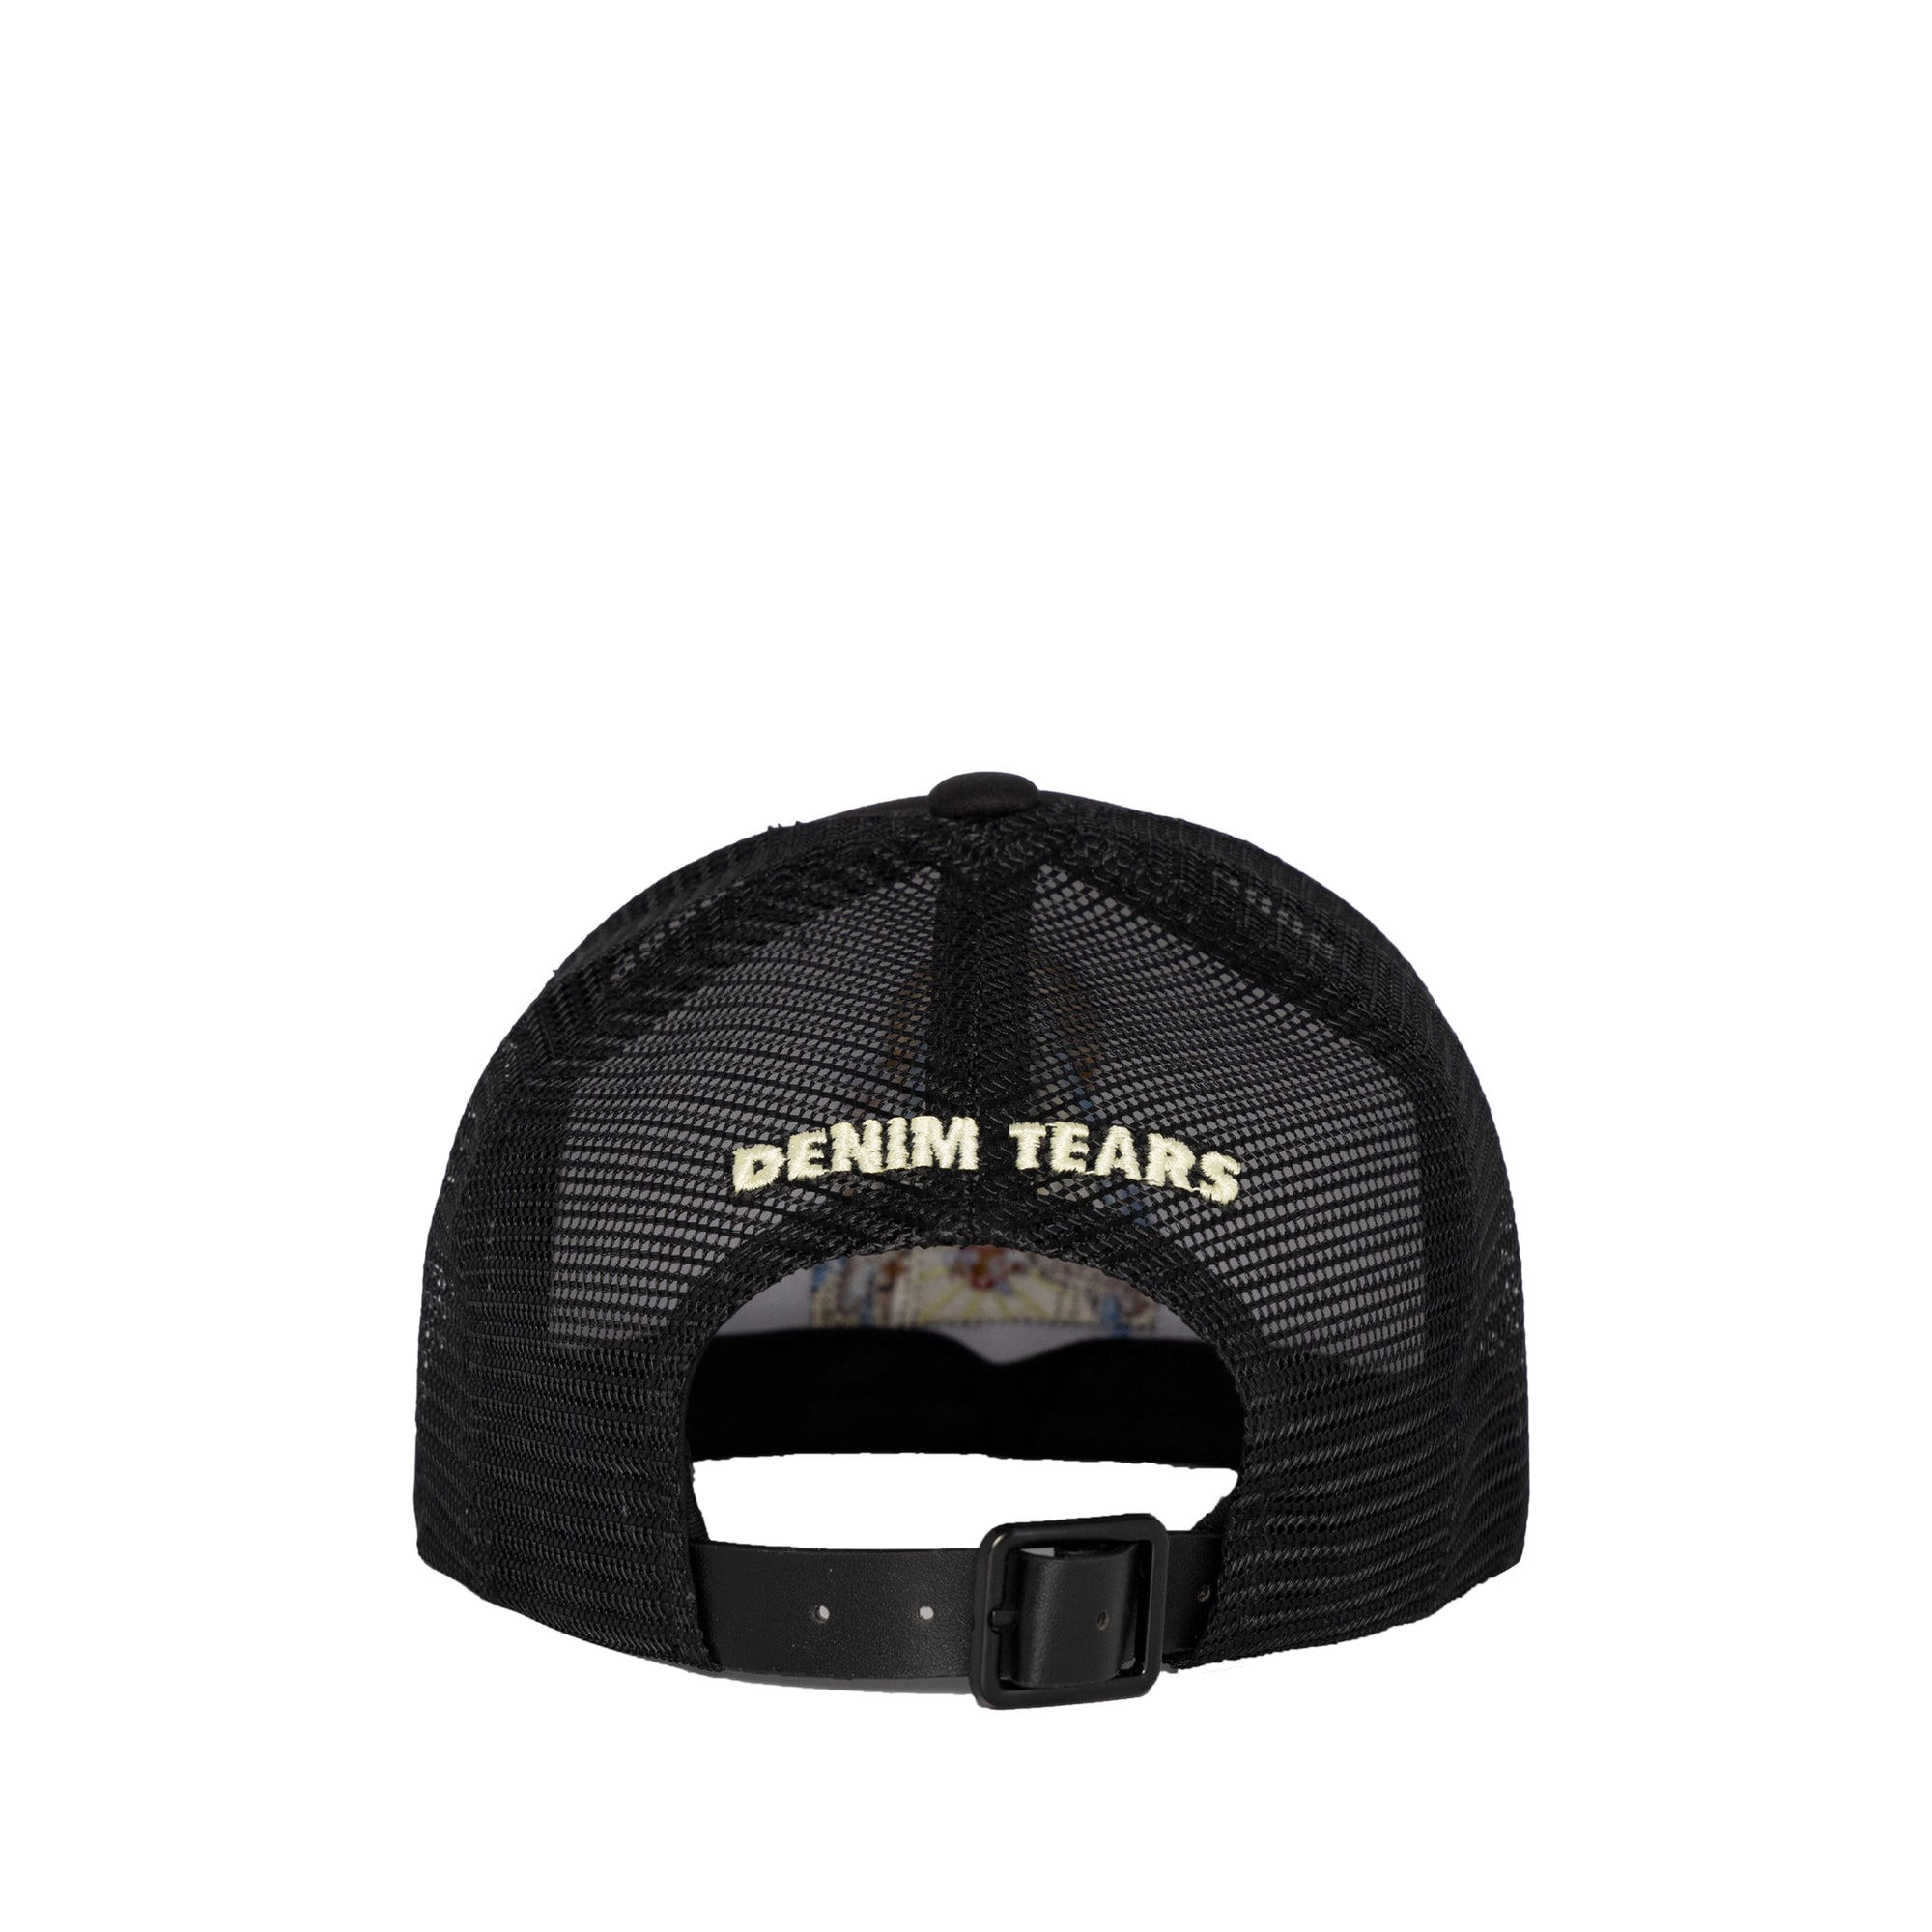 Denim Tears - Men's Black Madonna Trucker Hat - (Black) view 2